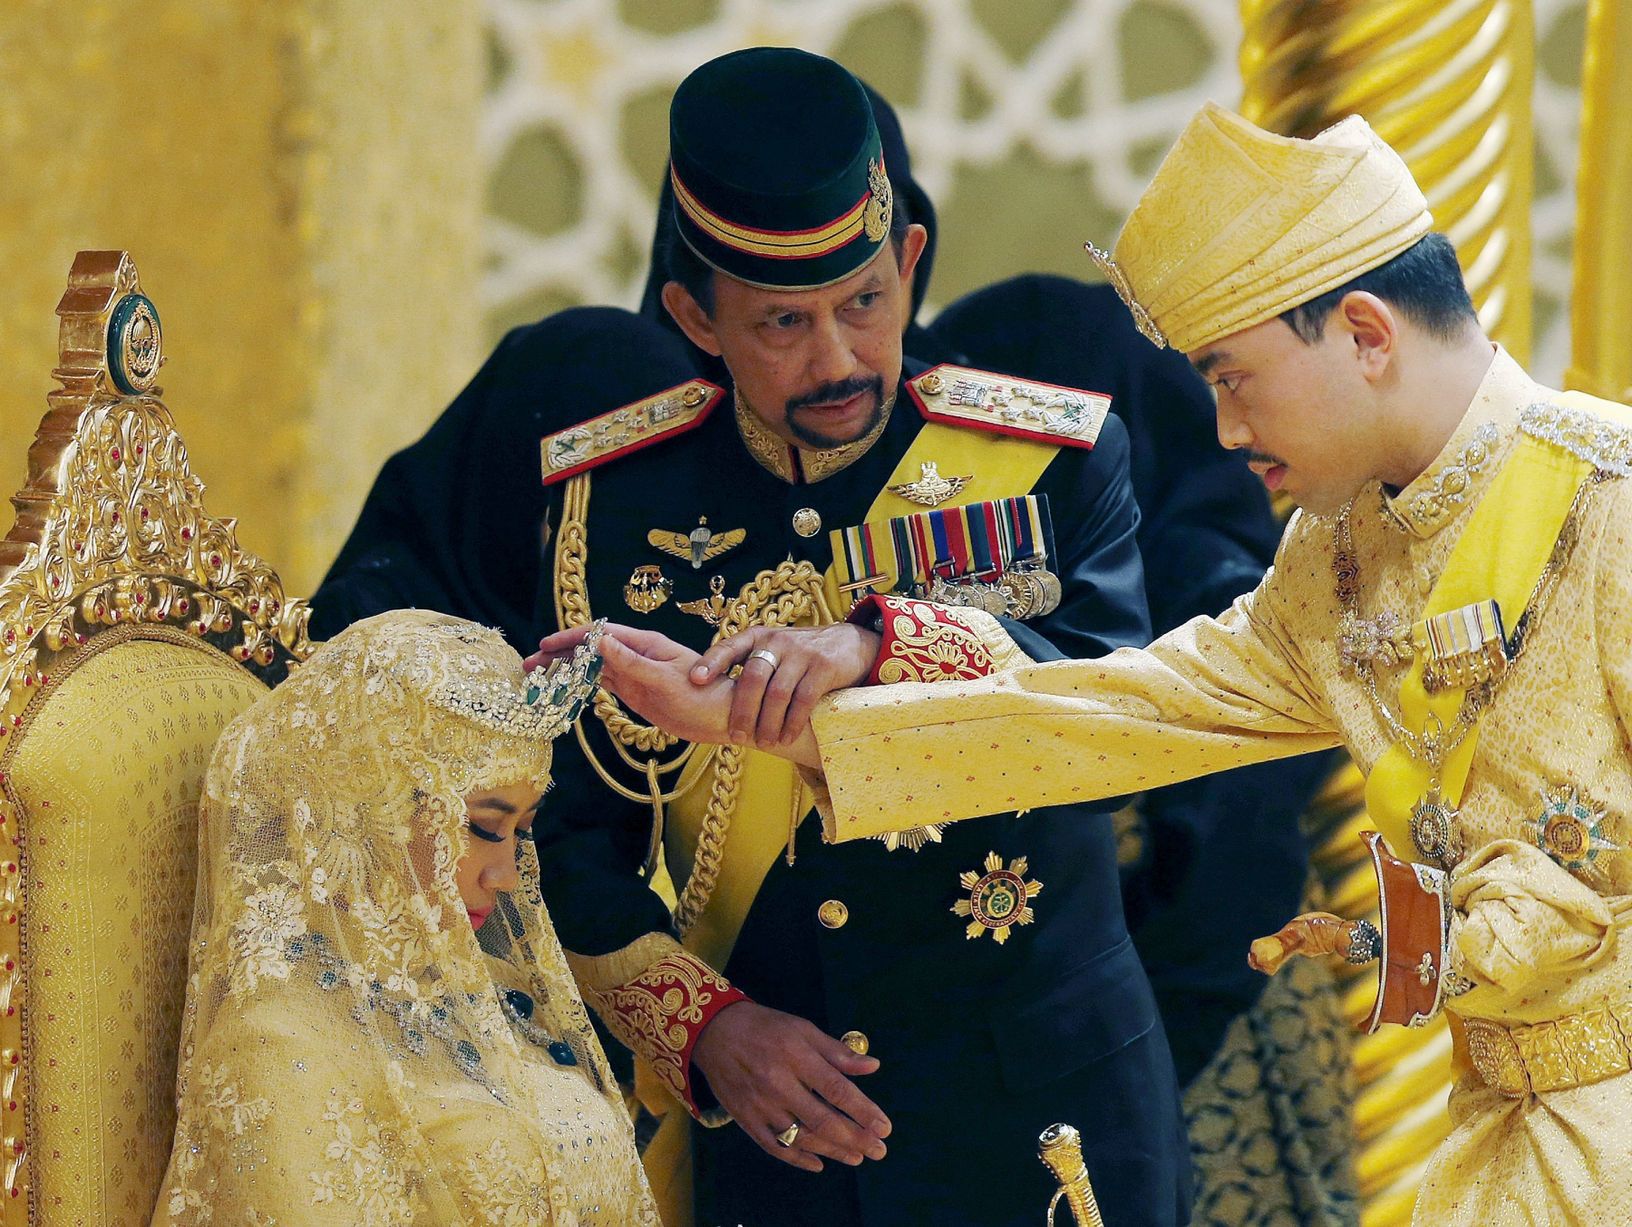 Wedding News: Sultan of Brunei's Son Celebrates Wedding